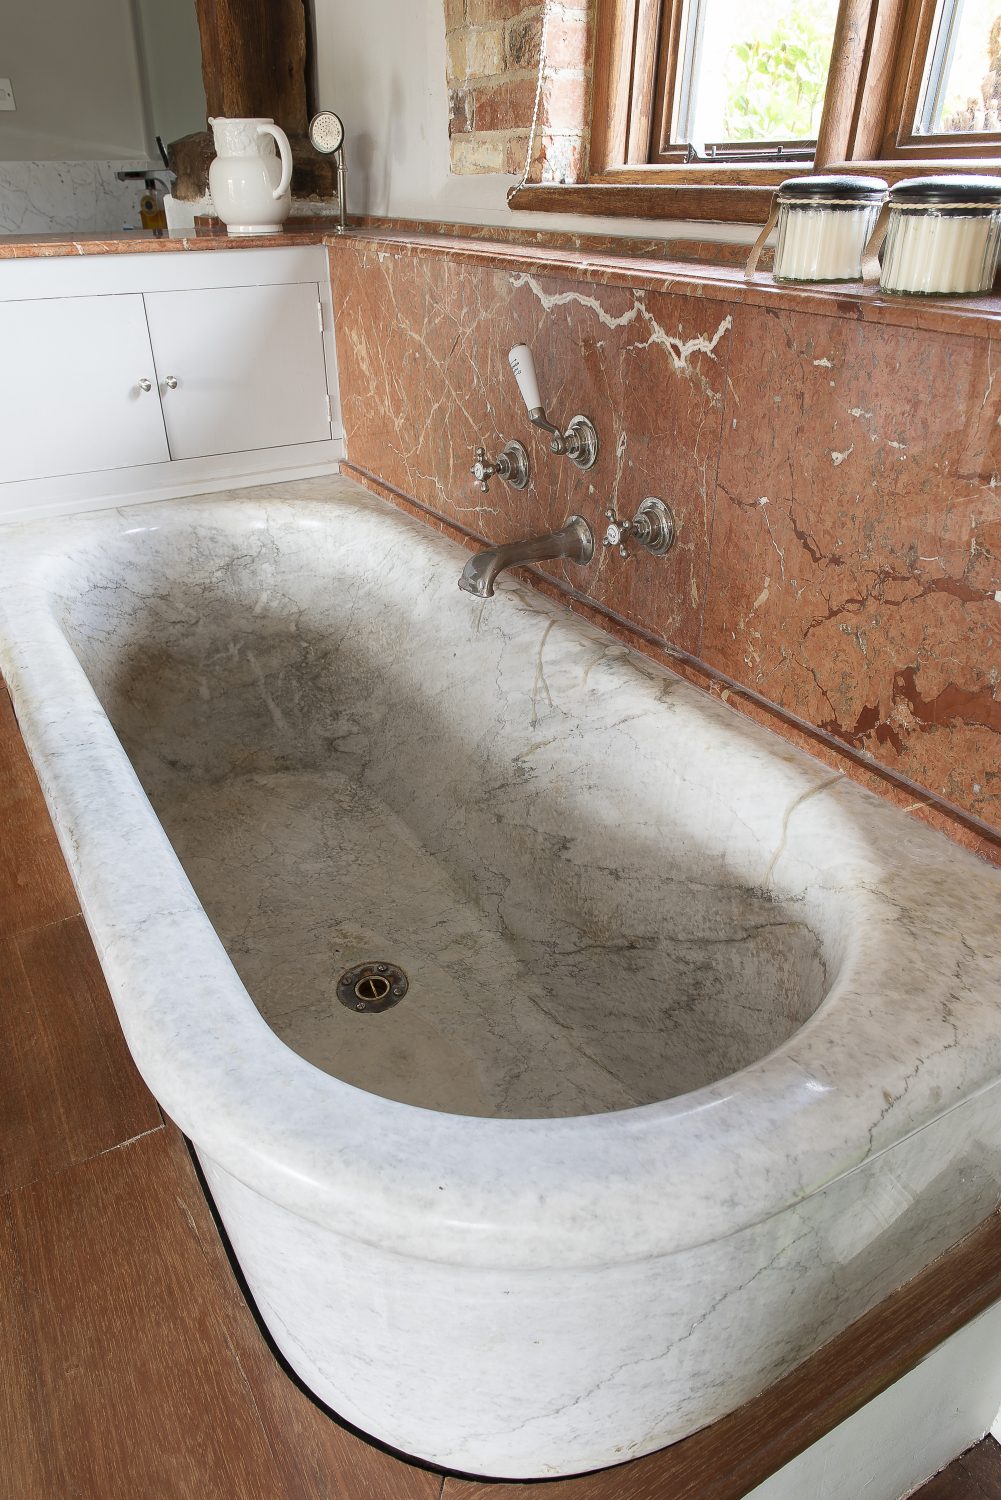 The original master bedroom’s en suite features a deep antique French marble bath